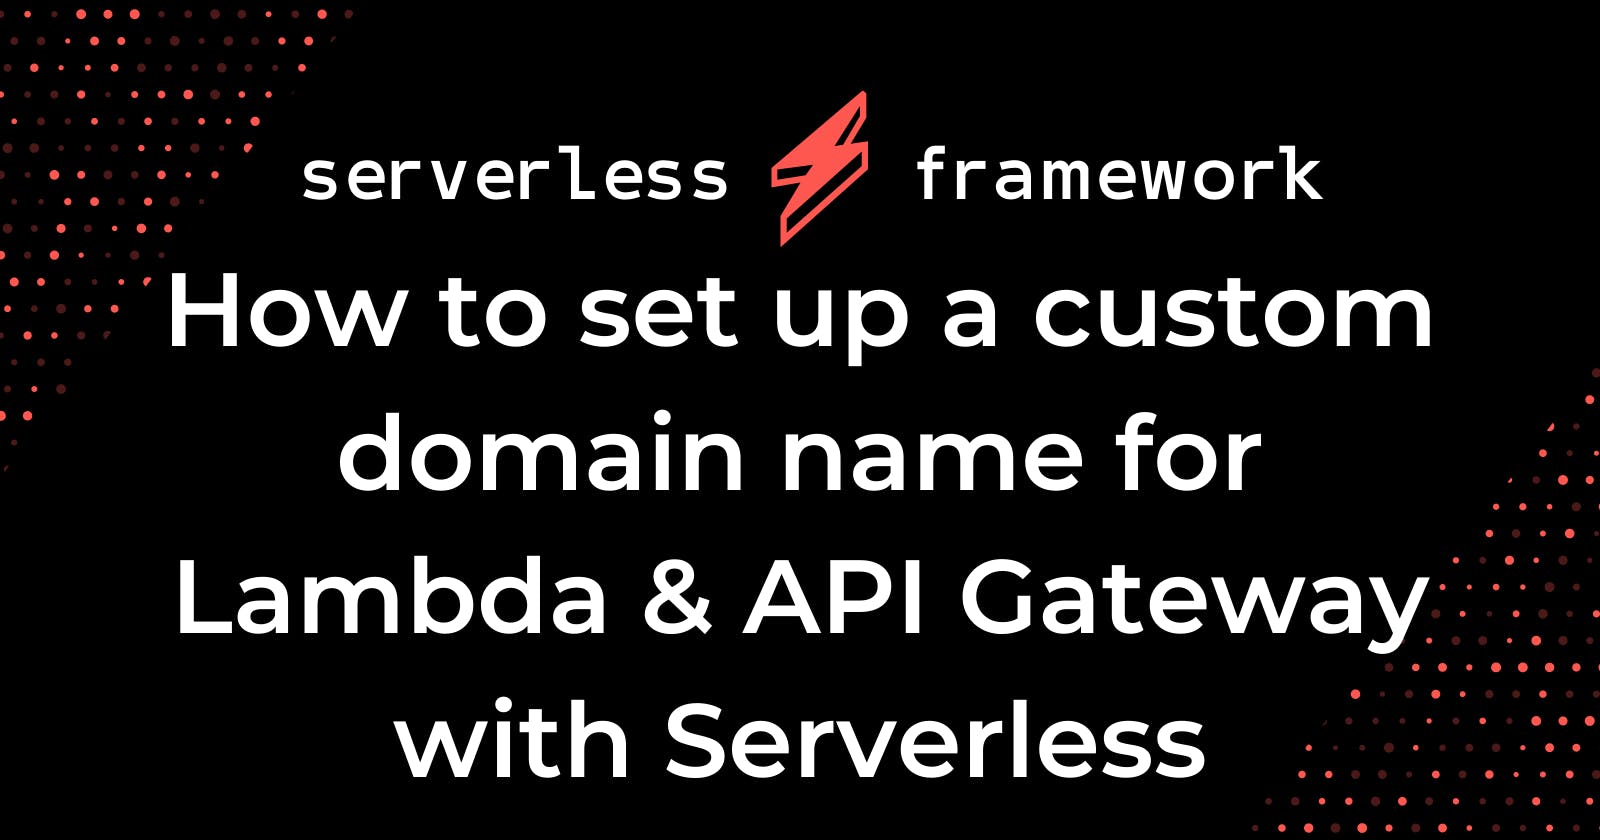 How to set up a custom domain name for Lambda & API Gateway with Serverless